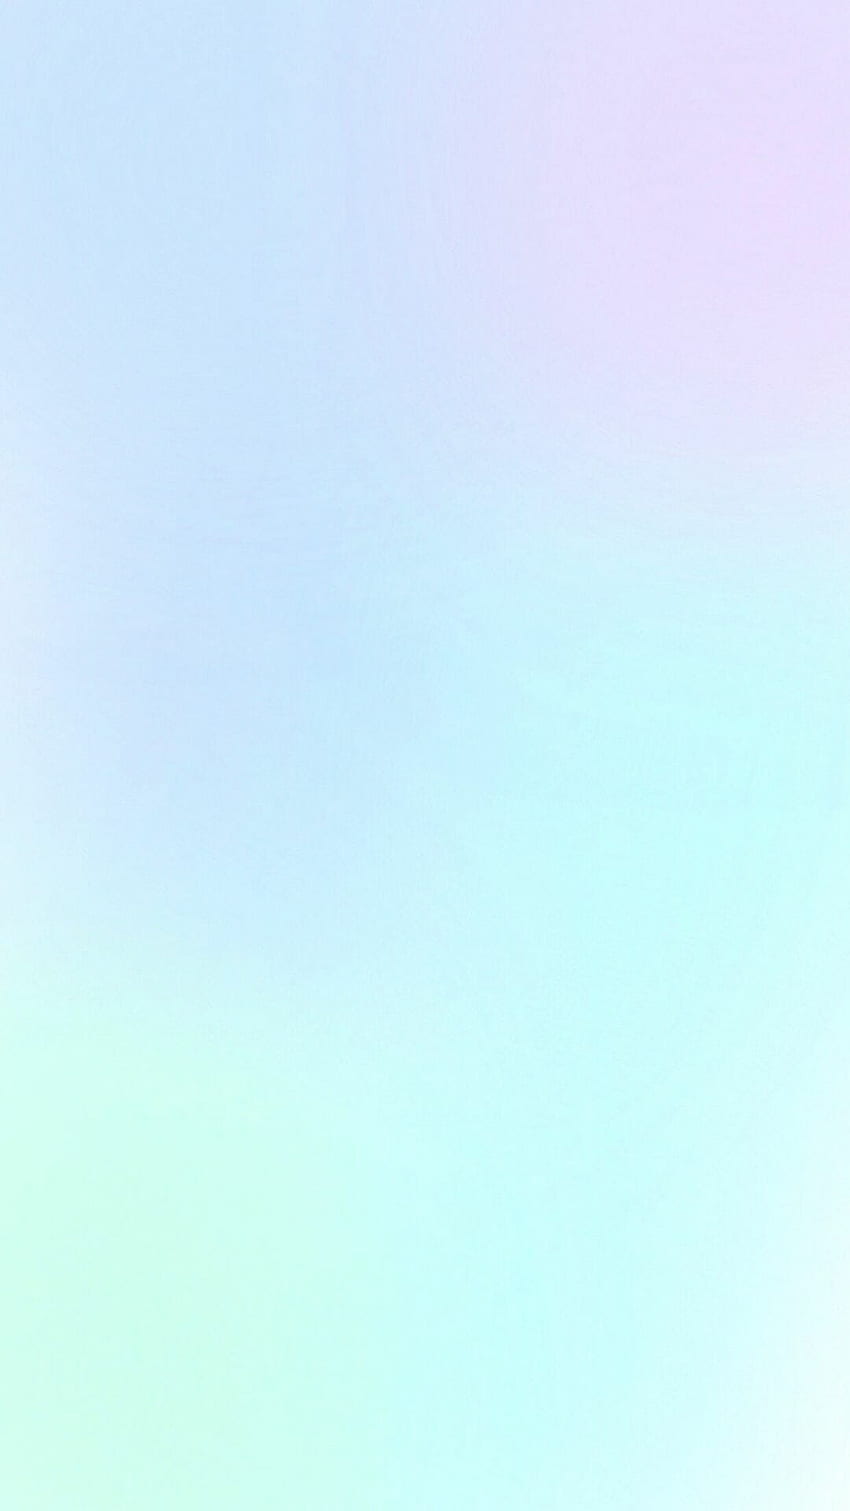 65 Ponsel biru pastel ungu mint ombre (gradien) - Latar Belakang Android / iPhone (png / jpg) (2022), Hijau dan Biru Ombre wallpaper ponsel HD